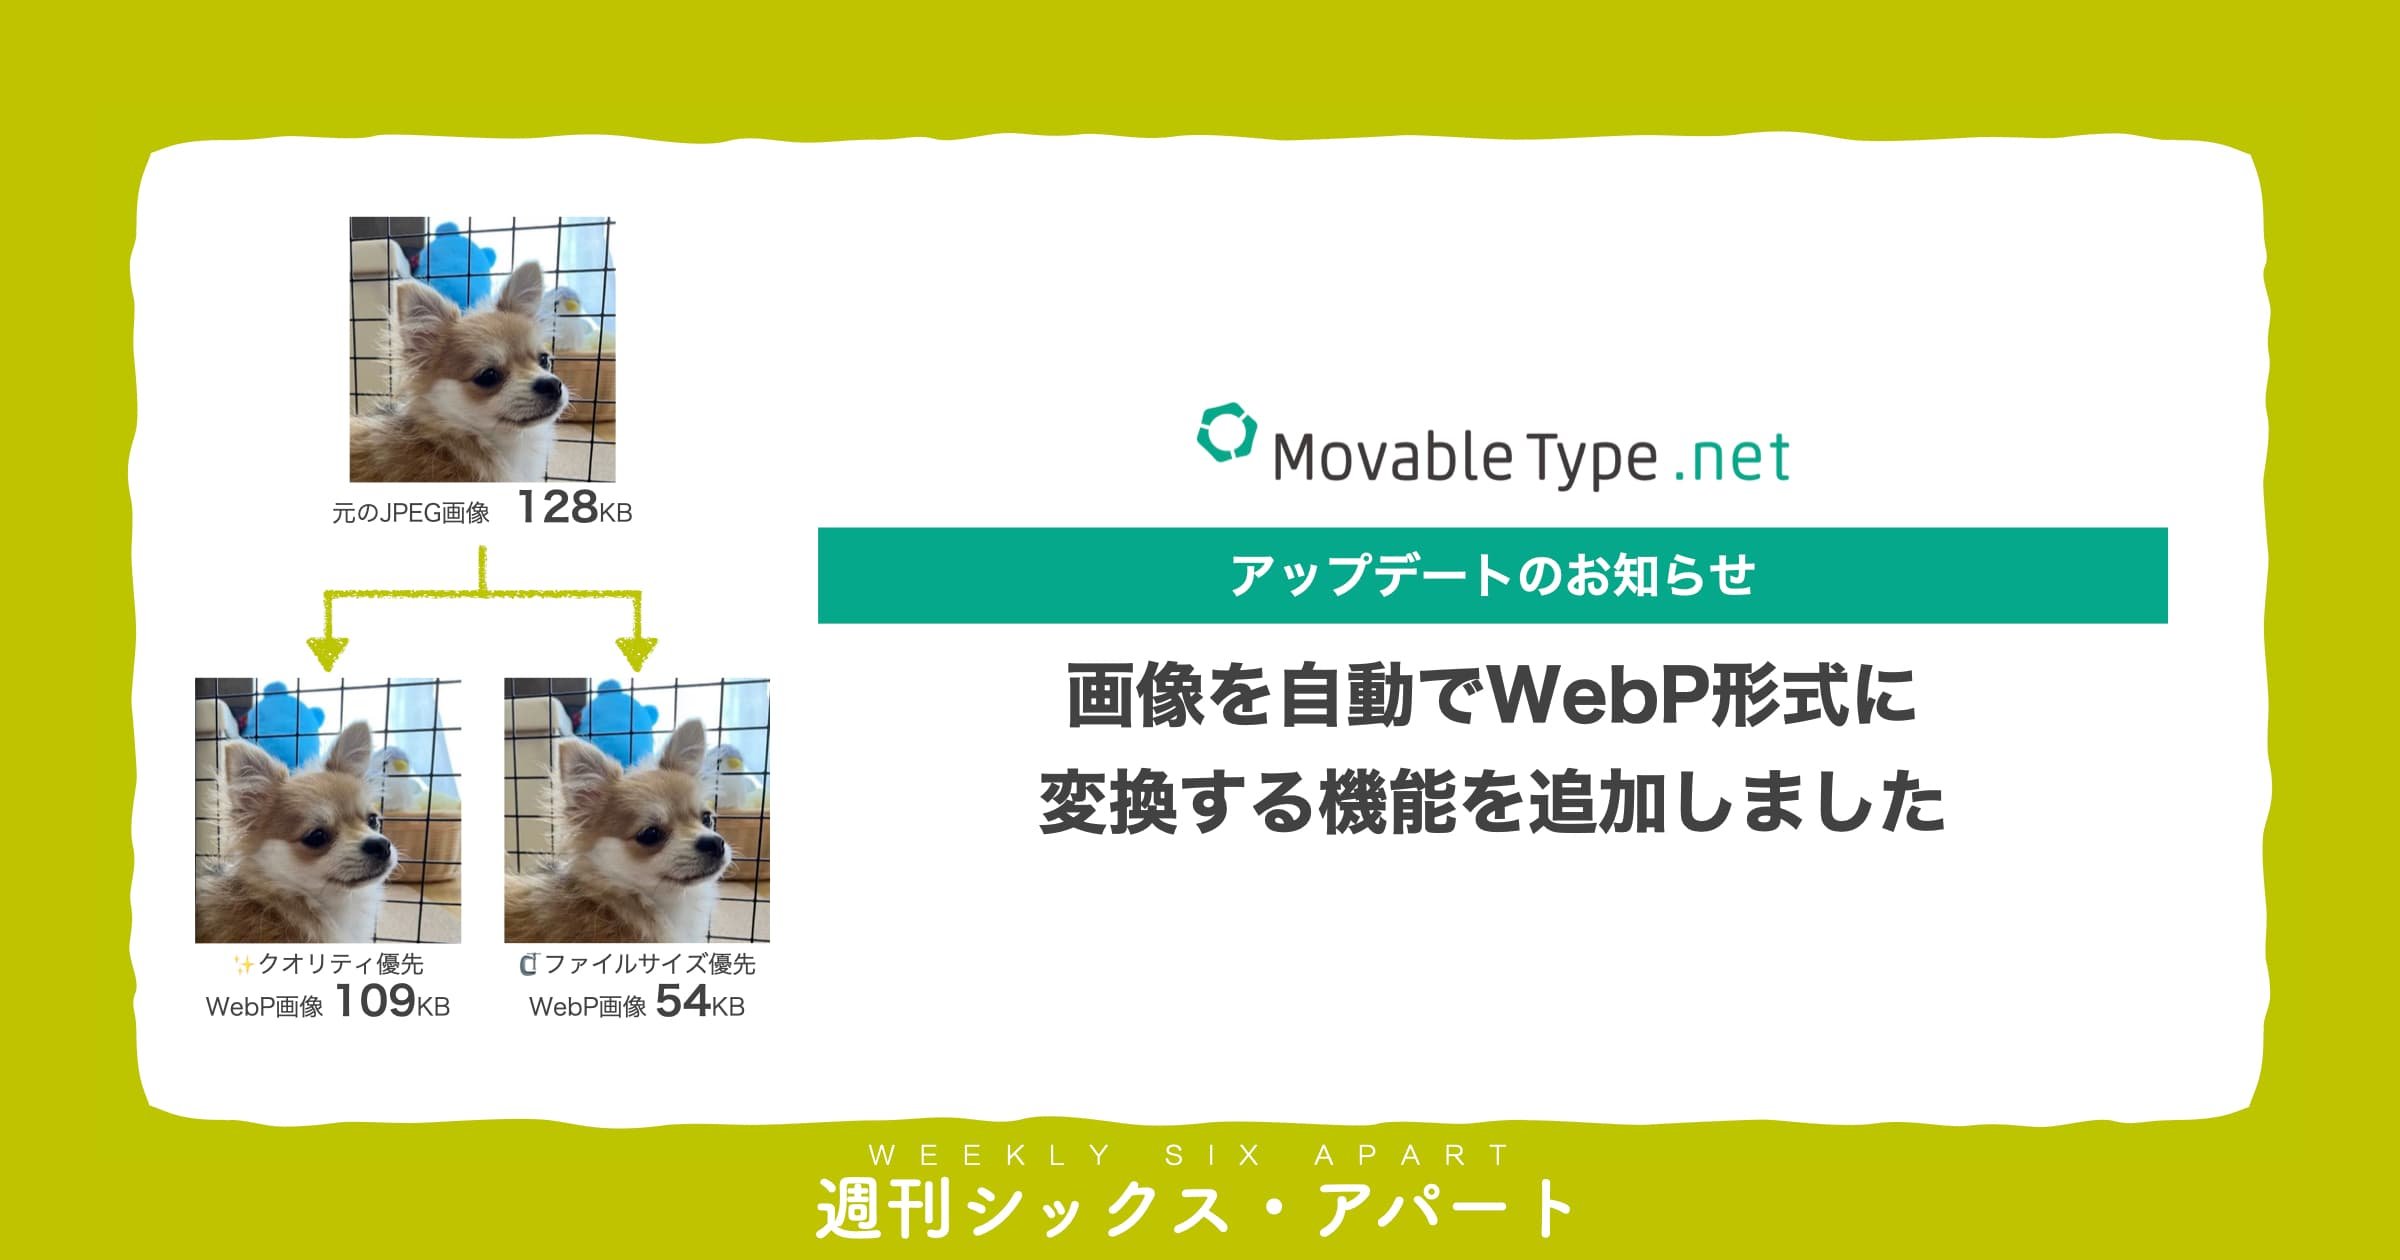 【MovableType.net】画像を自動でWebP形式に変換する機能を追加しました  #週刊SA